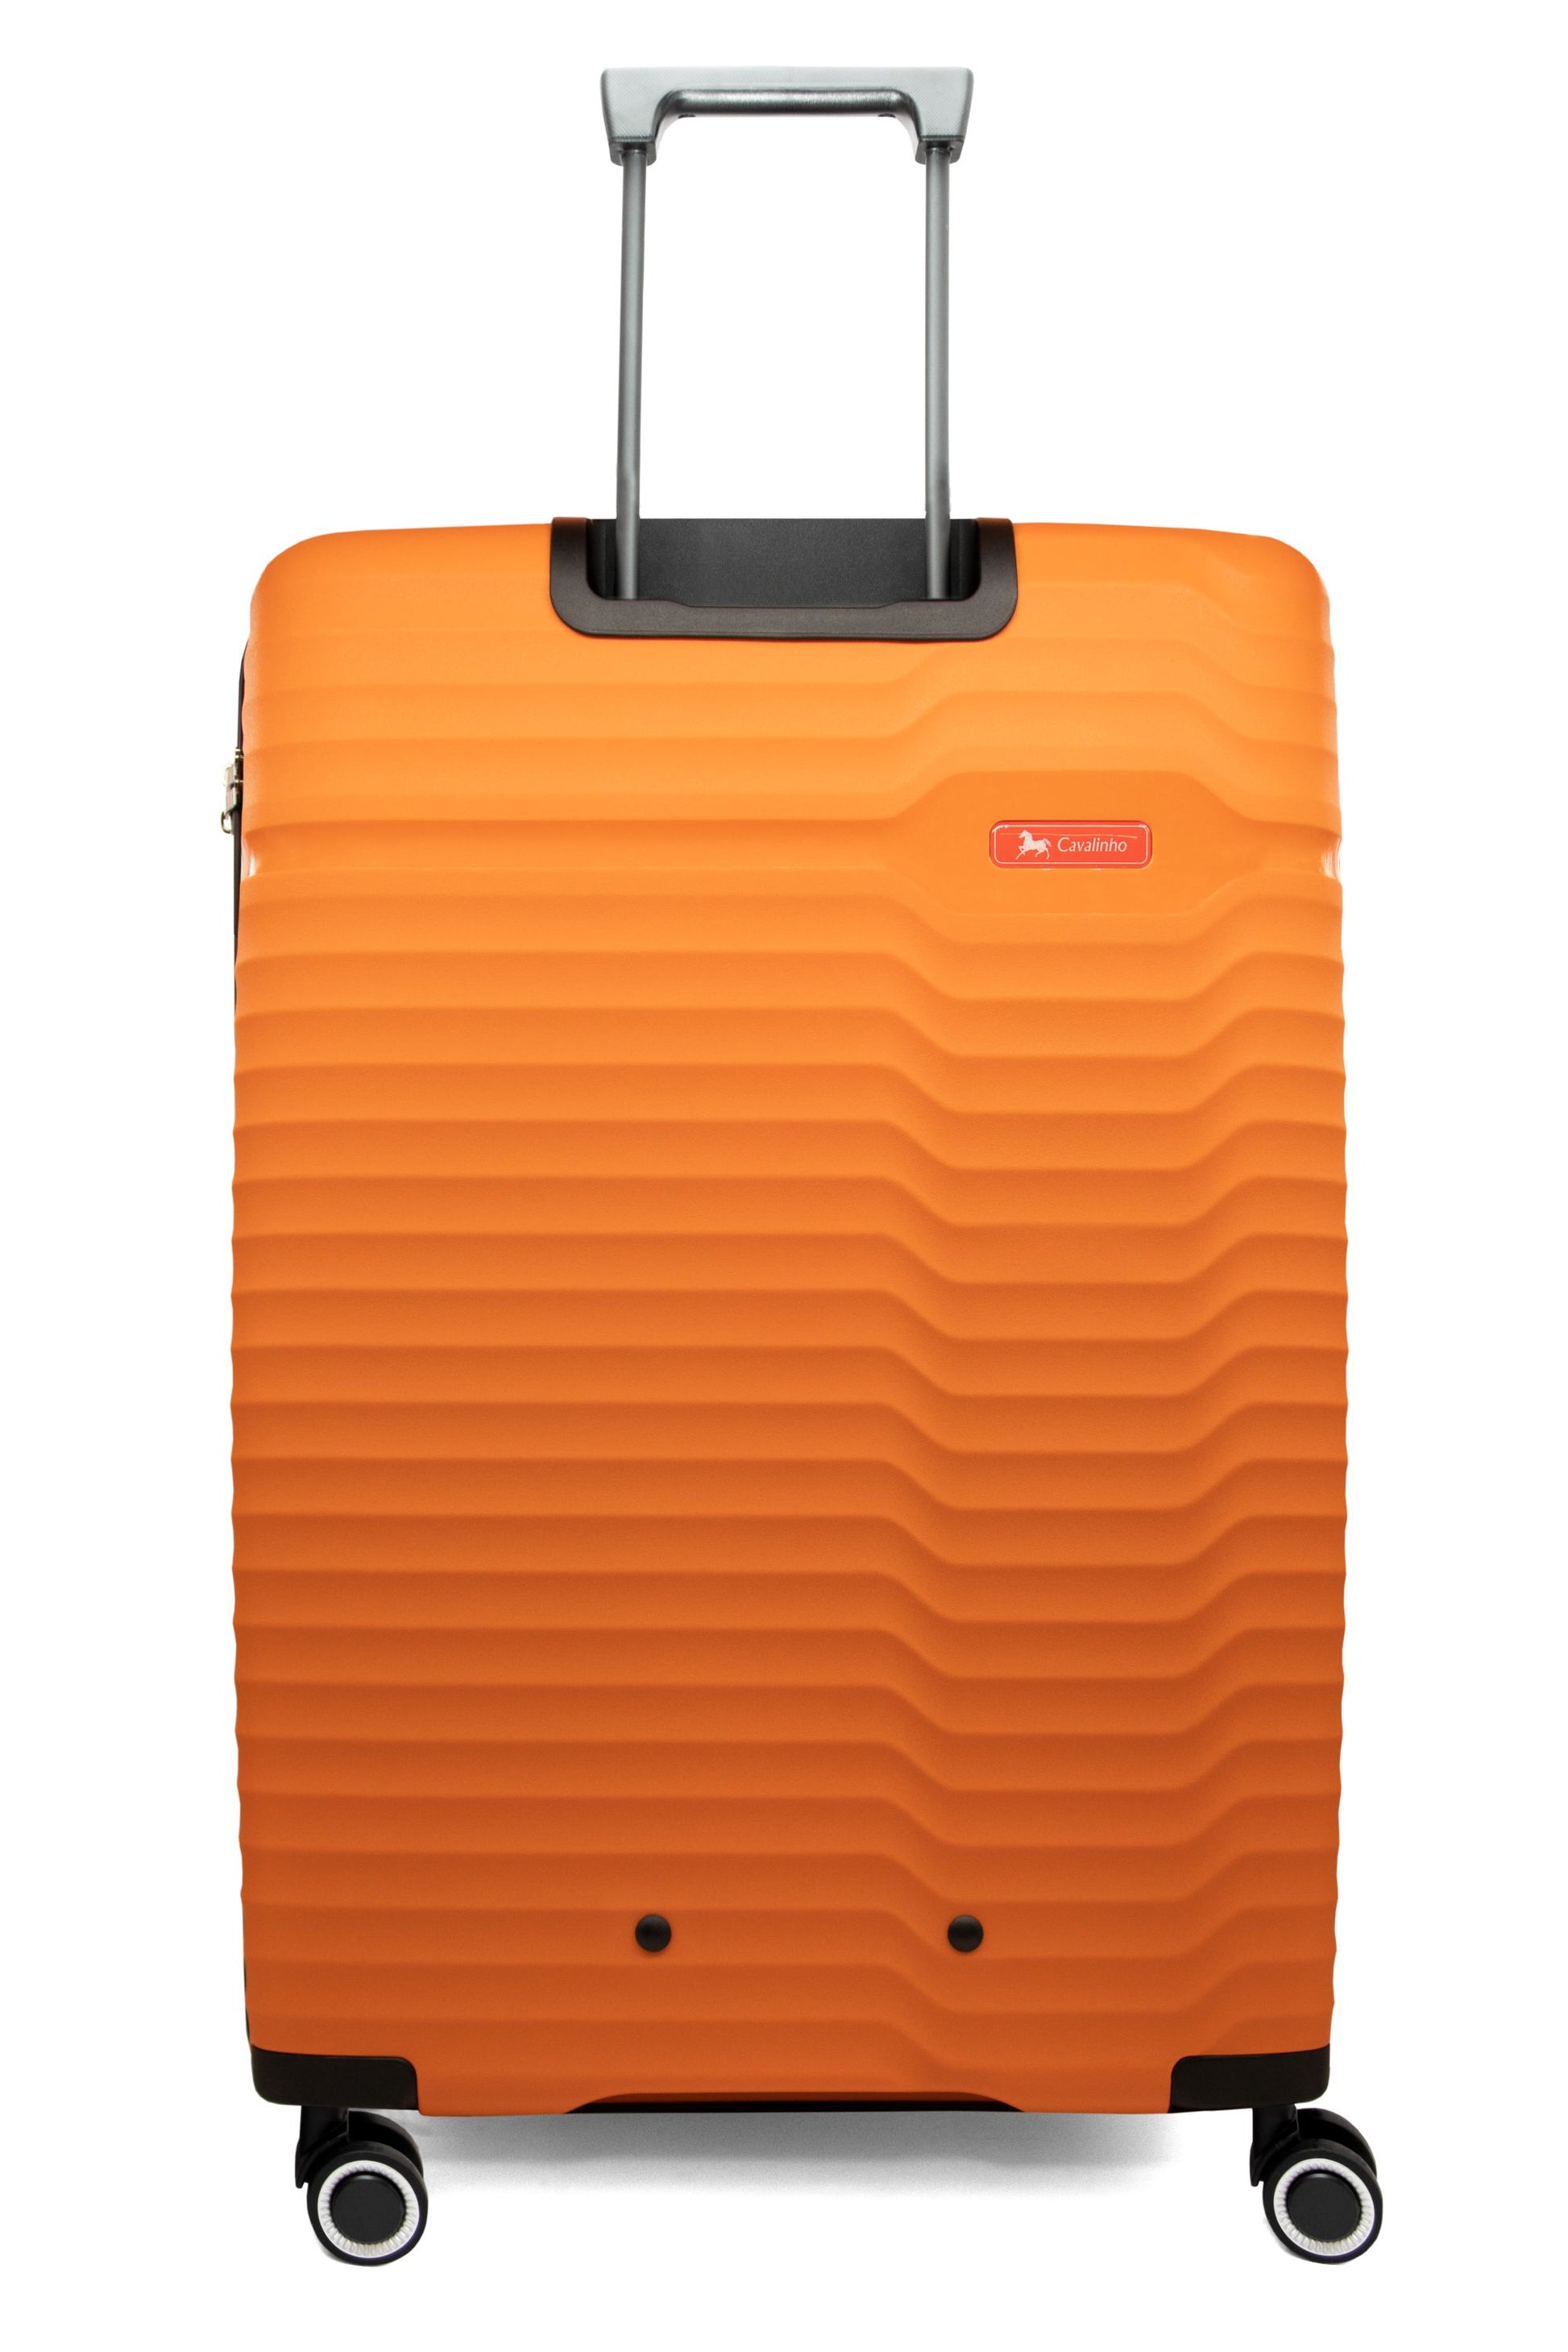 Cavalinho Check-in Hardside Luggage (24" or 28") - 28 inch DarkOrange - 68010003.37.28_3